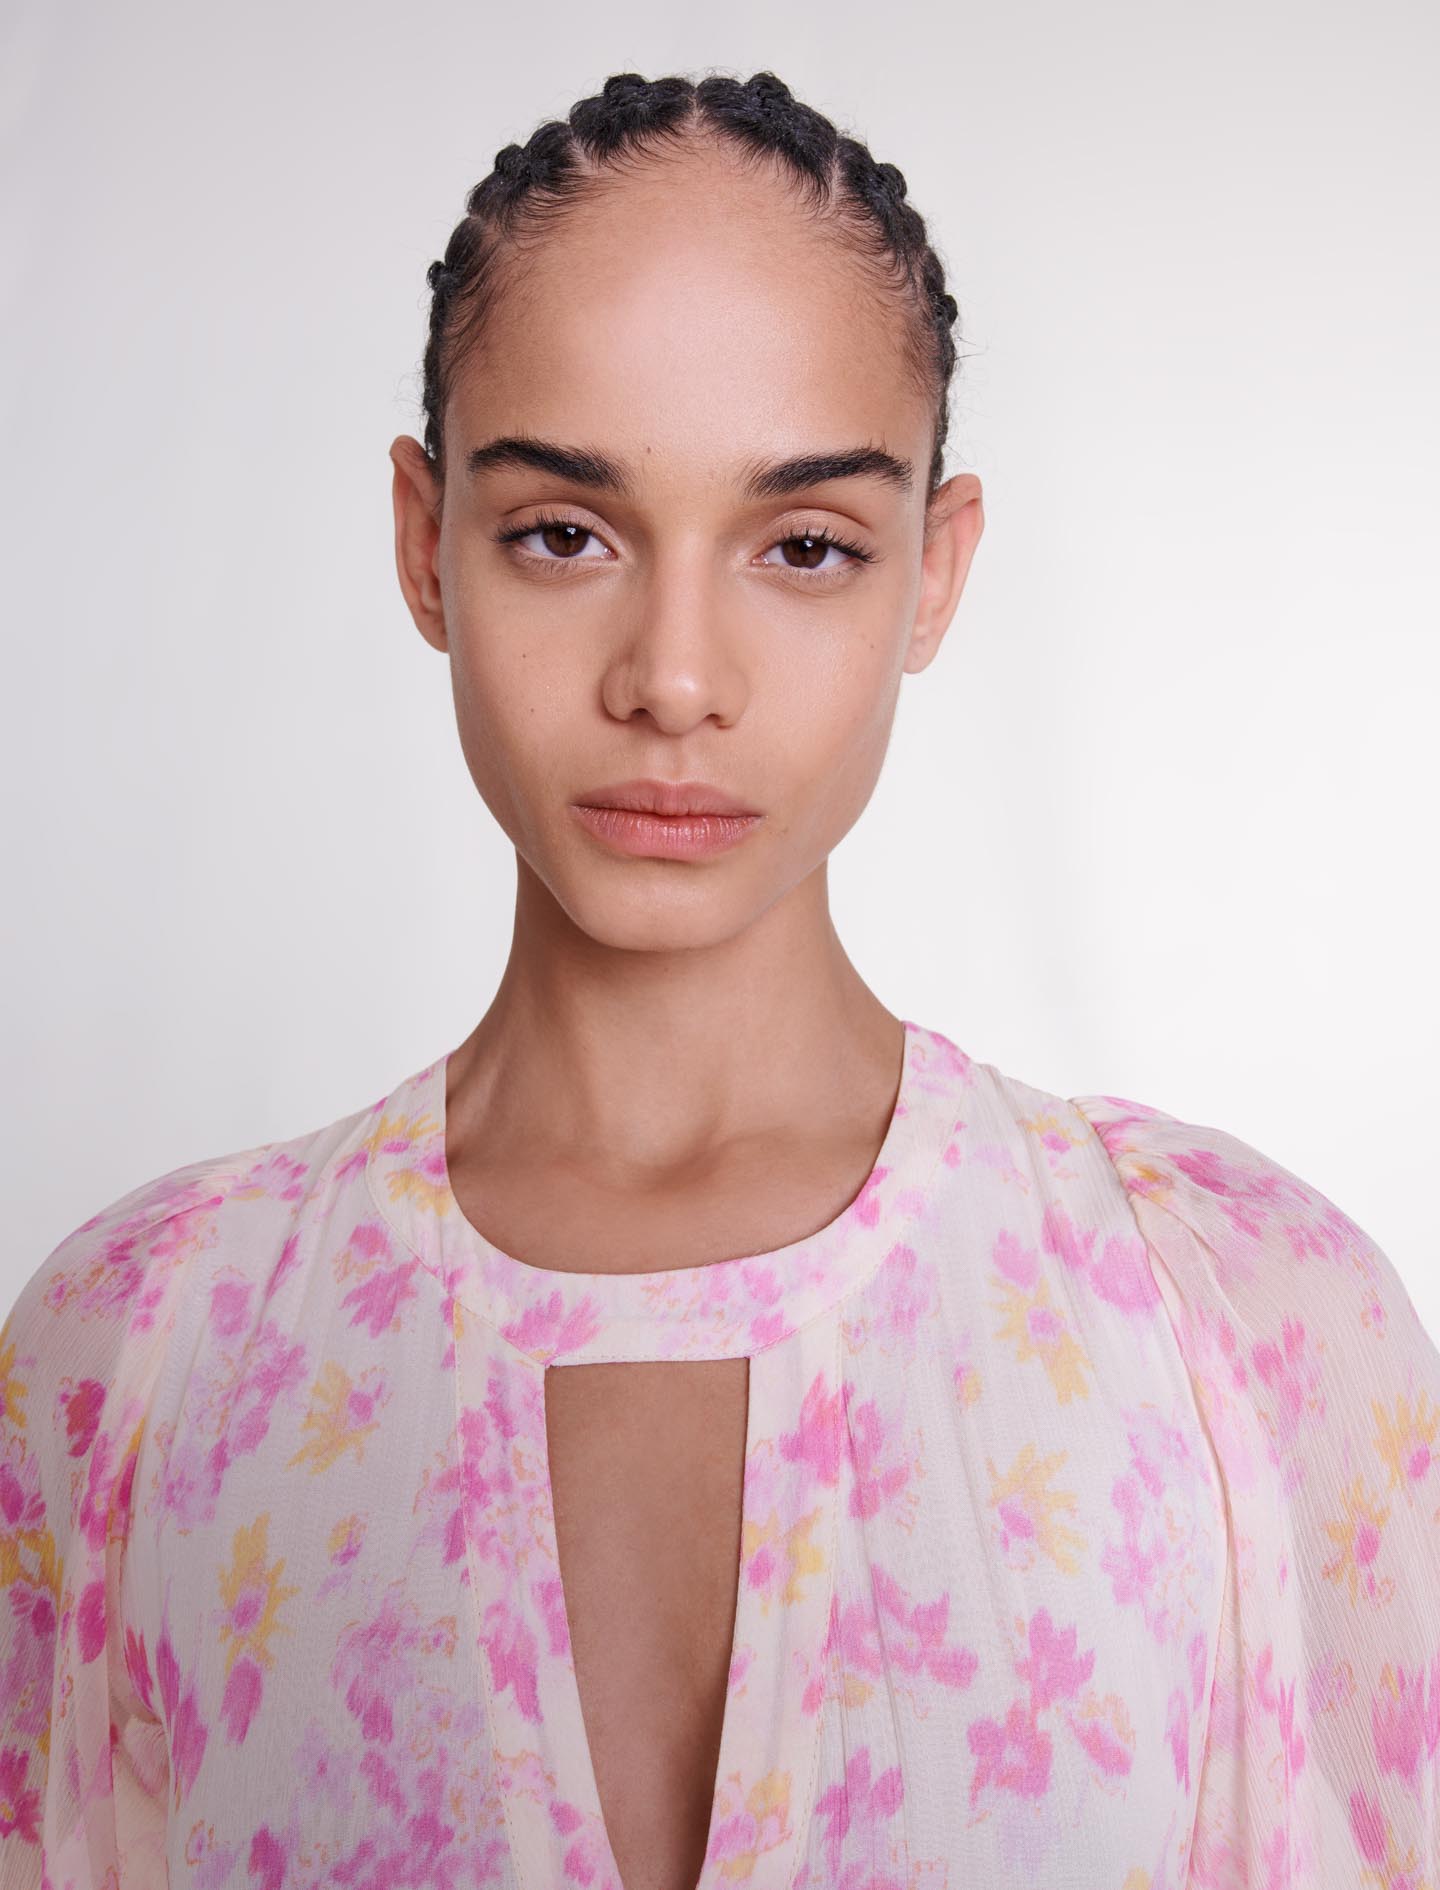 Floral print maxi dress  - Pink